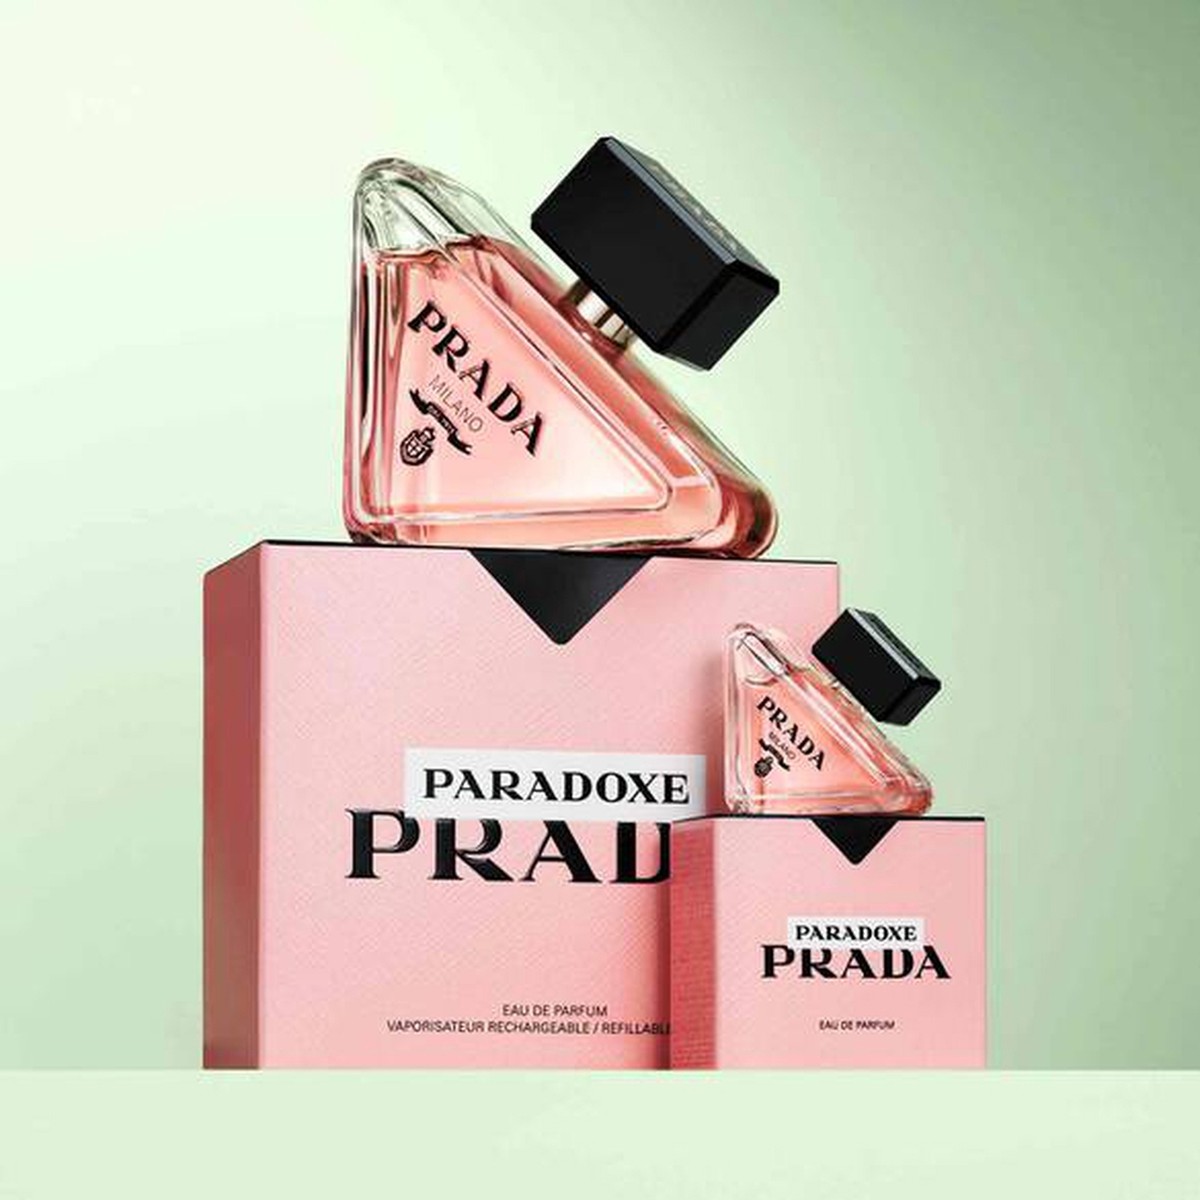 Prada Paradoxe Perfume Feminino Eau de Parfum 30ml - DOLCE VITA